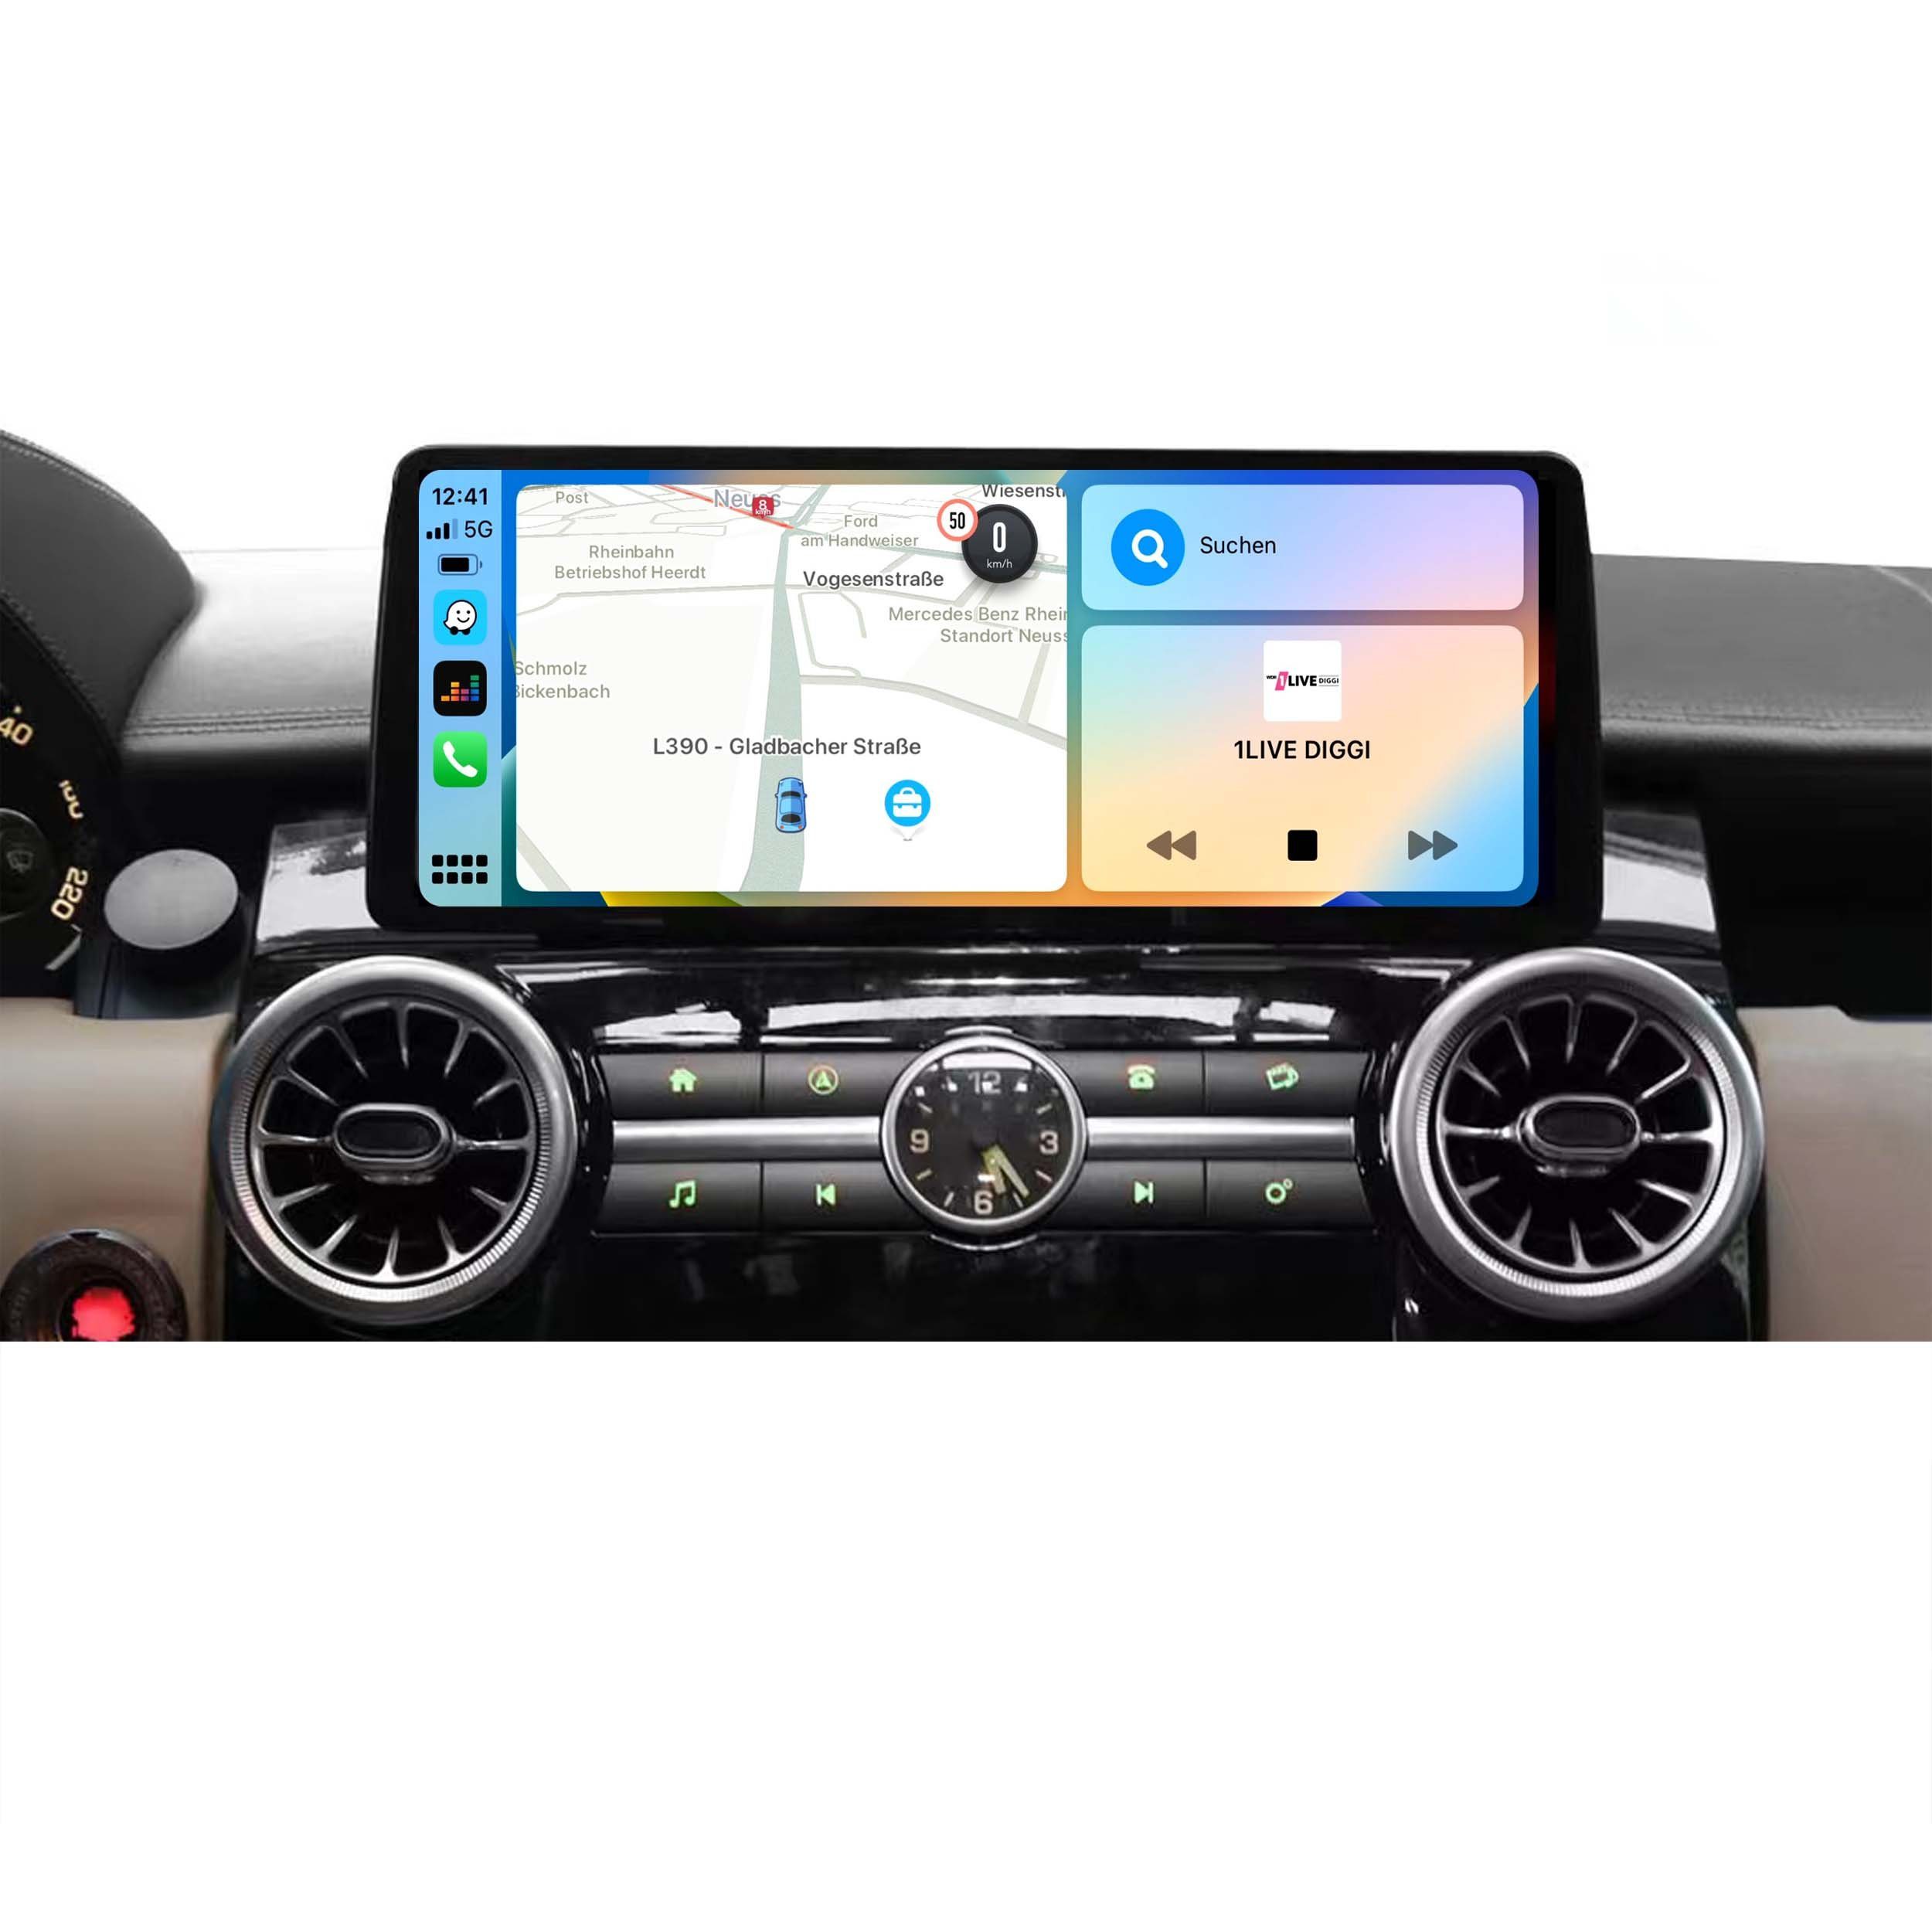 TAFFIO Für Land Rover Discovery 4 DENSO 12,3 " Touchscreen Android CarPlay Einbau-Navigationsgerät